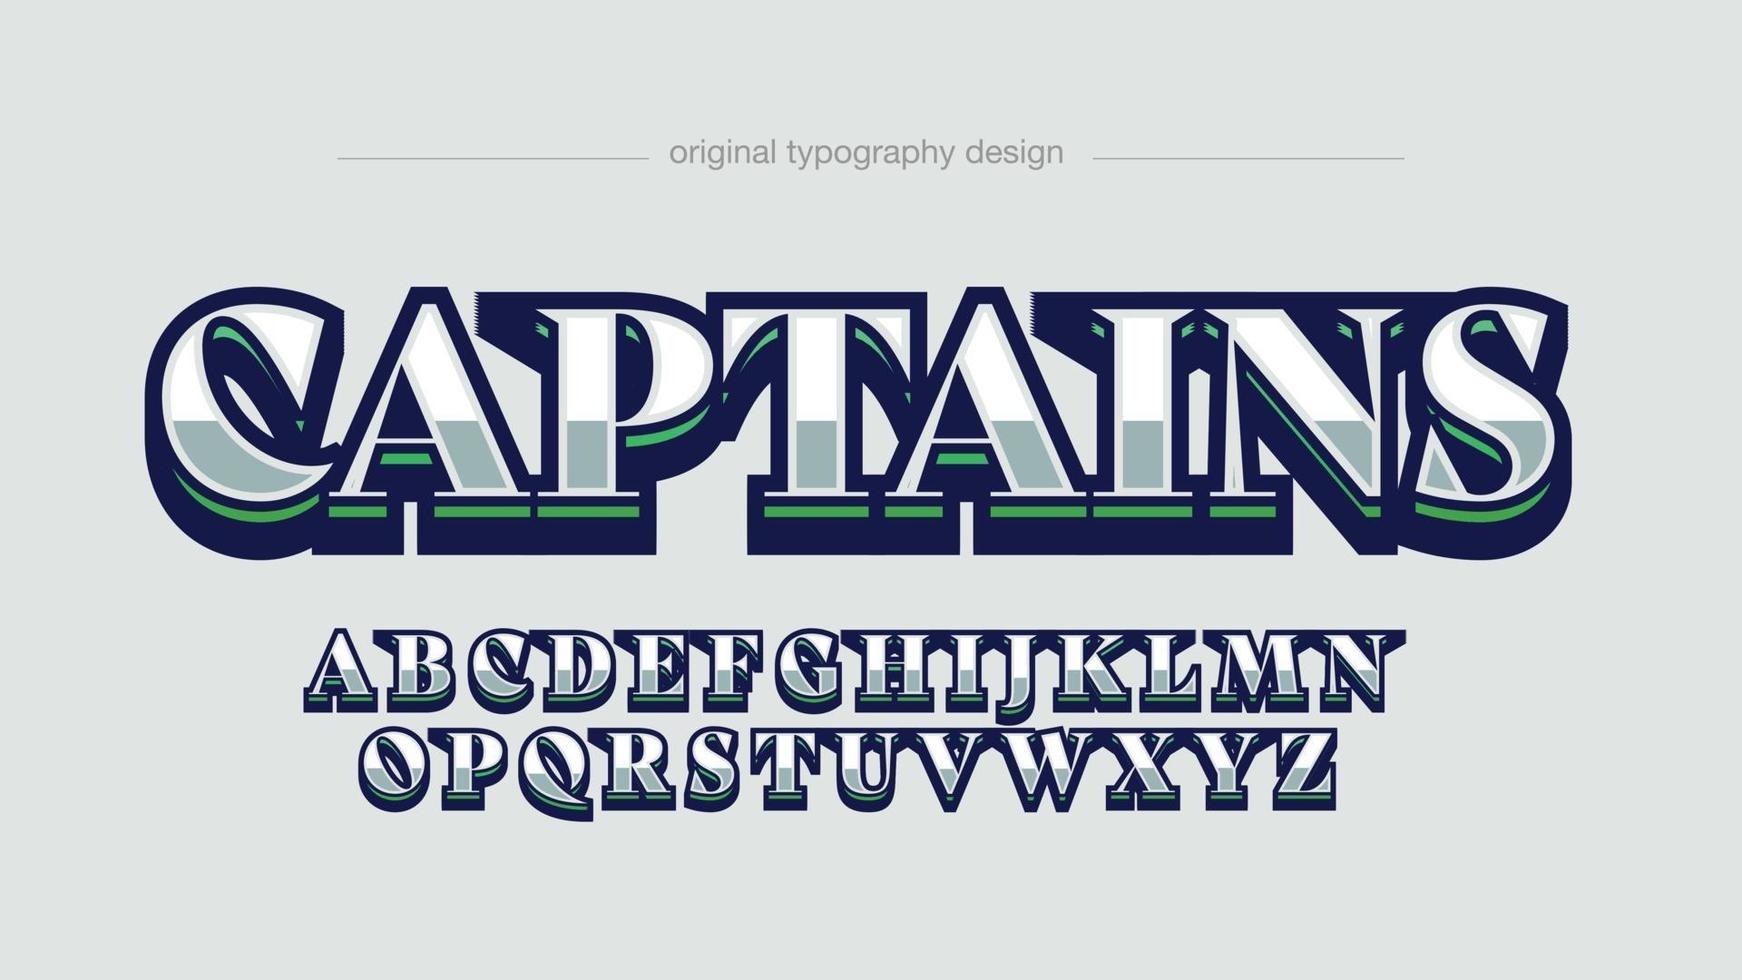 typographie de style logo sport moderne argent et vert vecteur